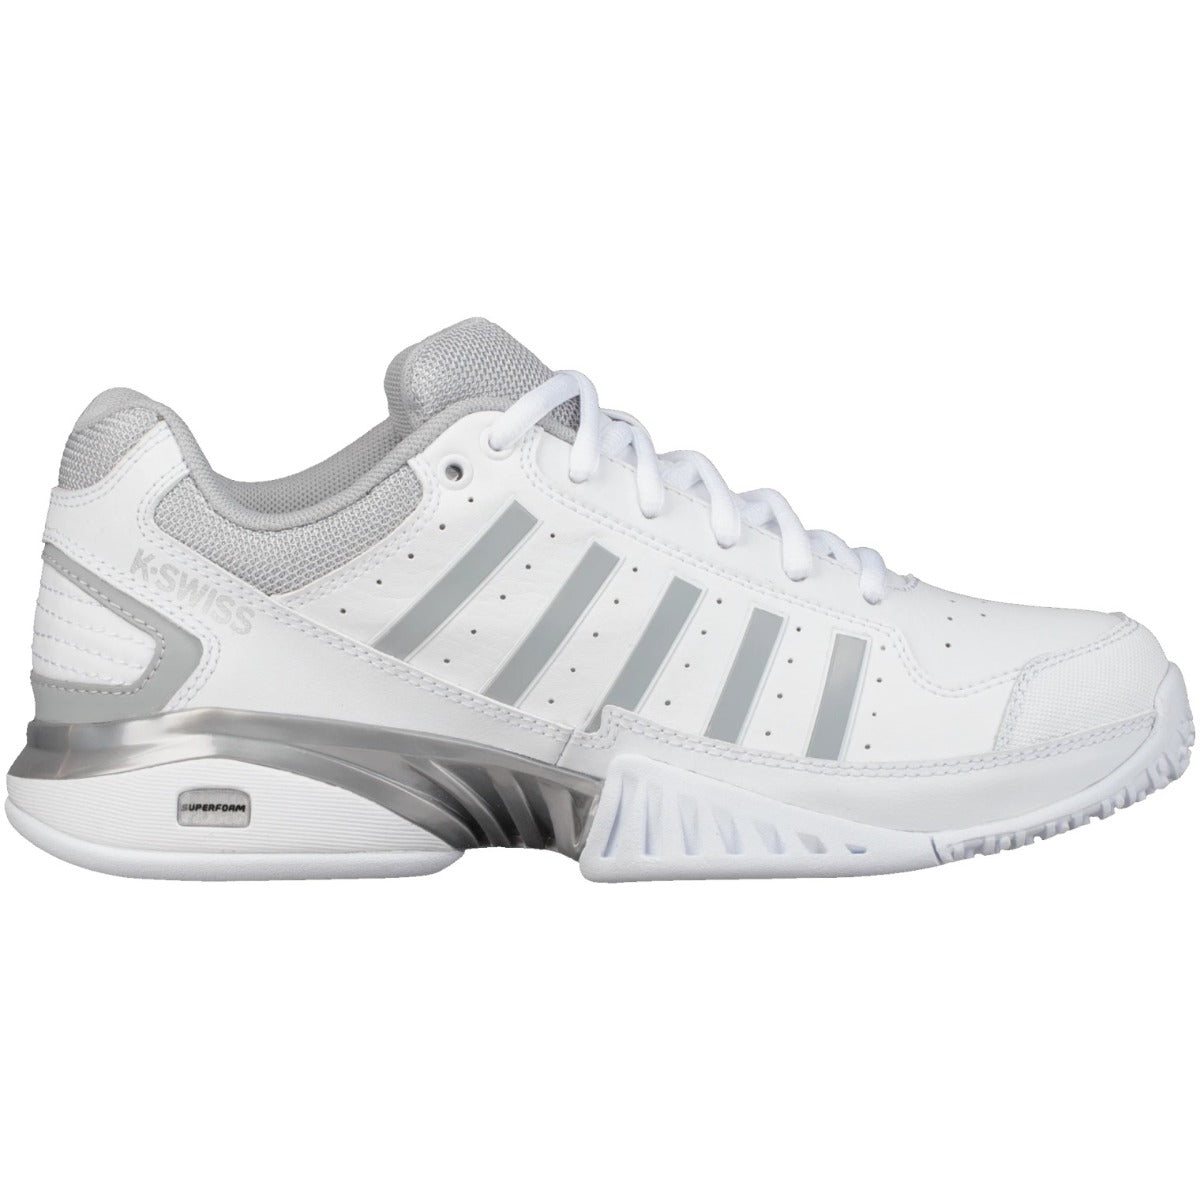 K Swiss Receiver Iv Omni Tennis Shoe Womens (White Silver)